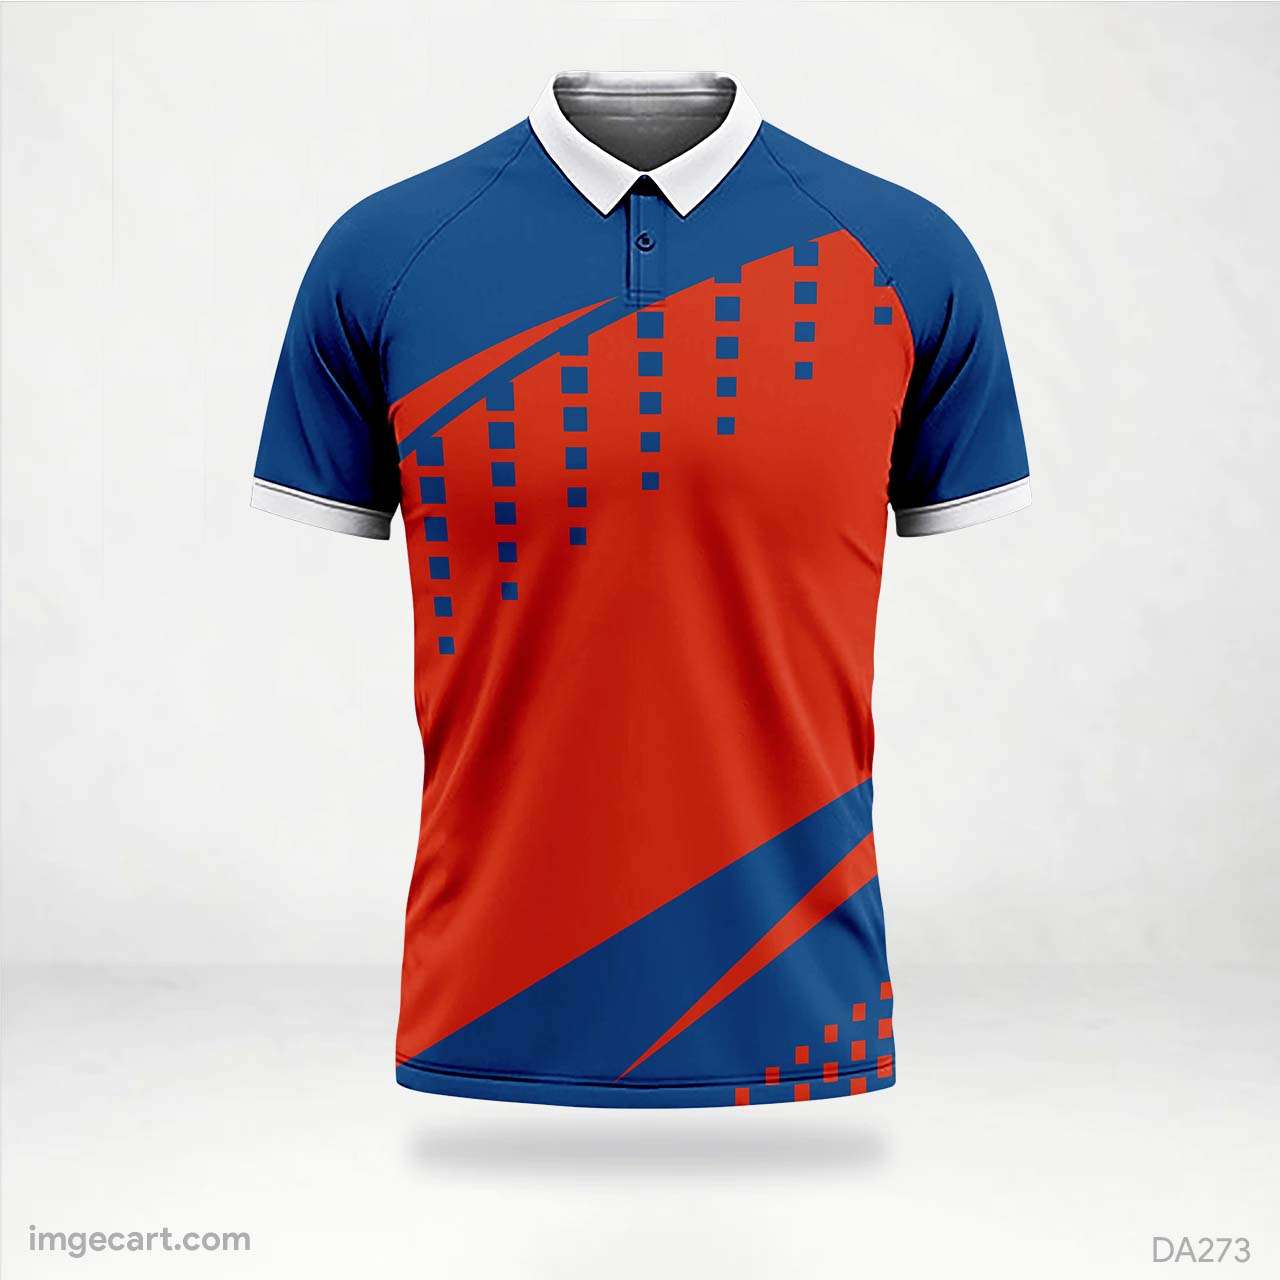 Football Jersey Design Blue and Orange Pattern - imgecart